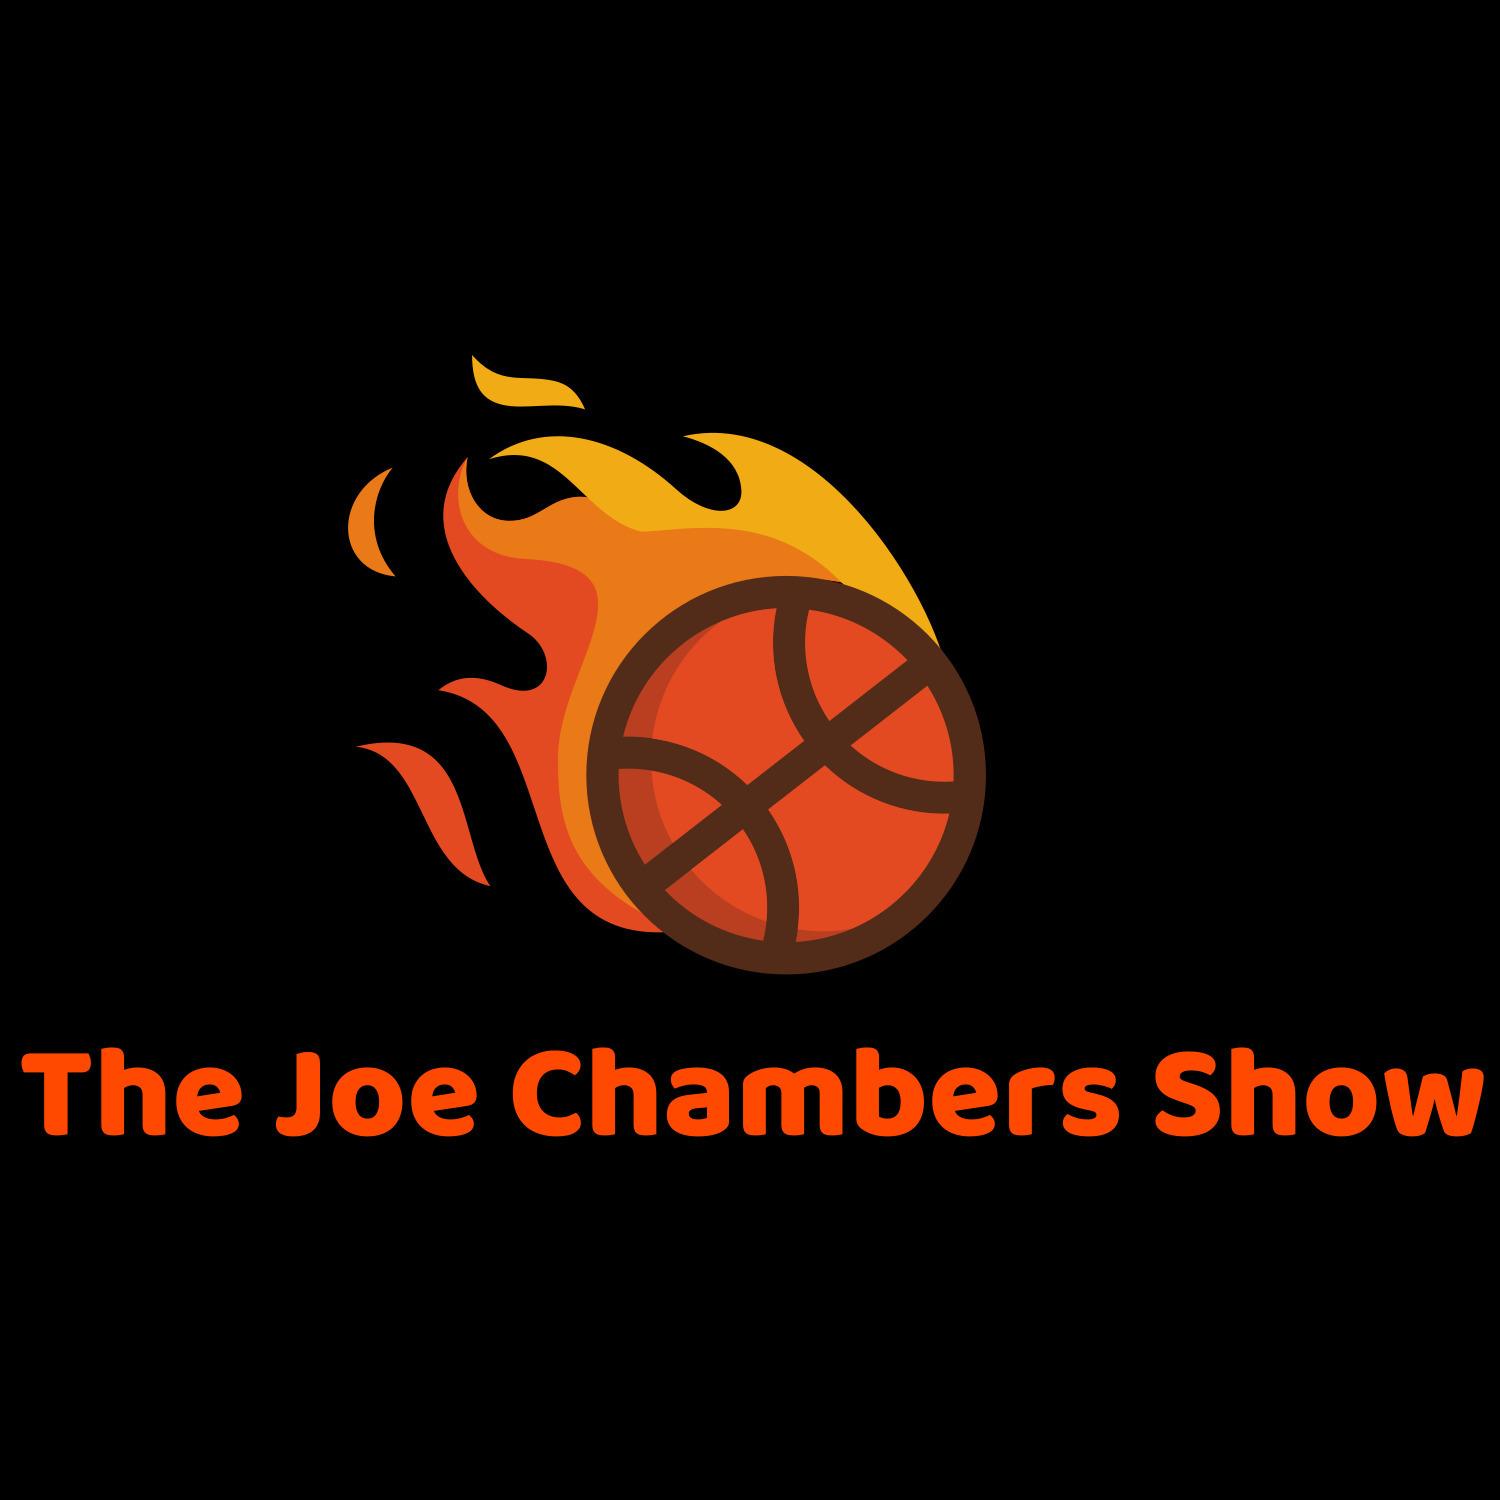 The Joe Chambers Show